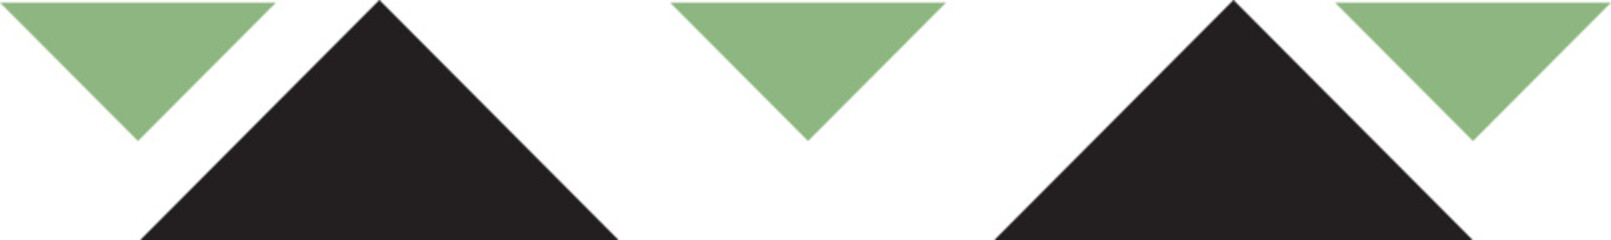 Geometric Memphis Triangle